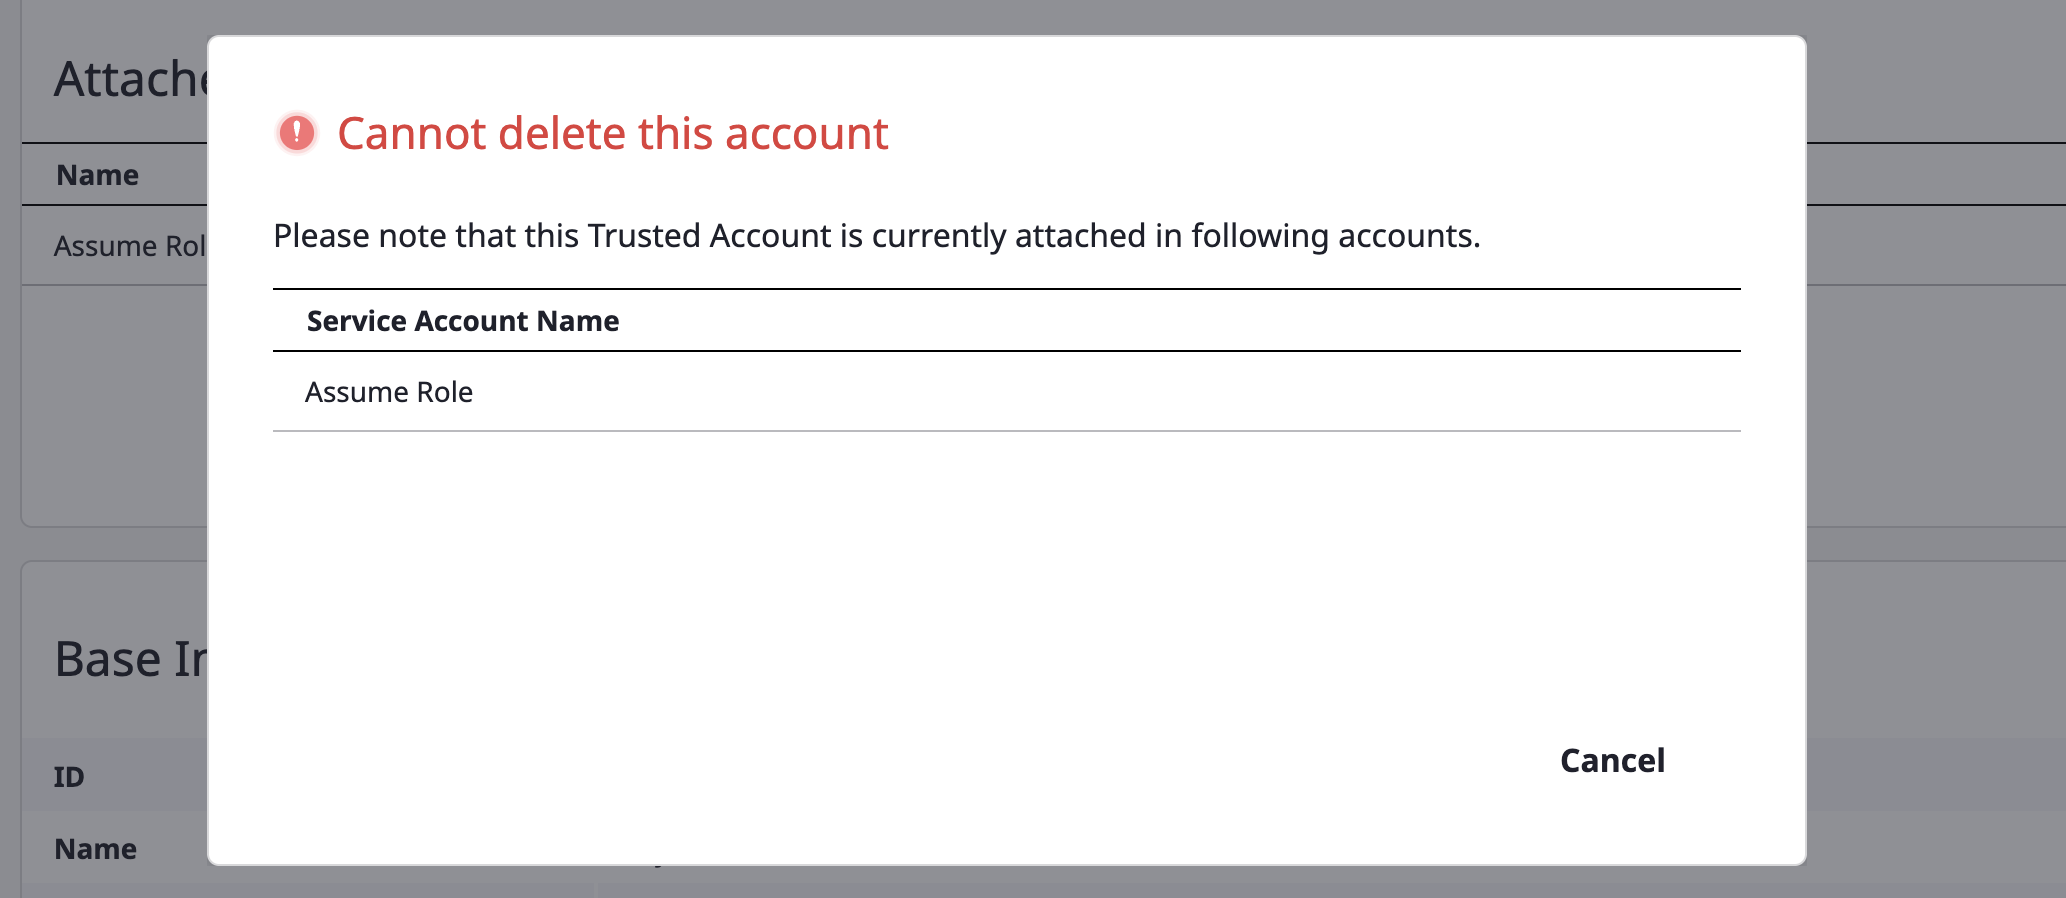 service-account-cannot-delete